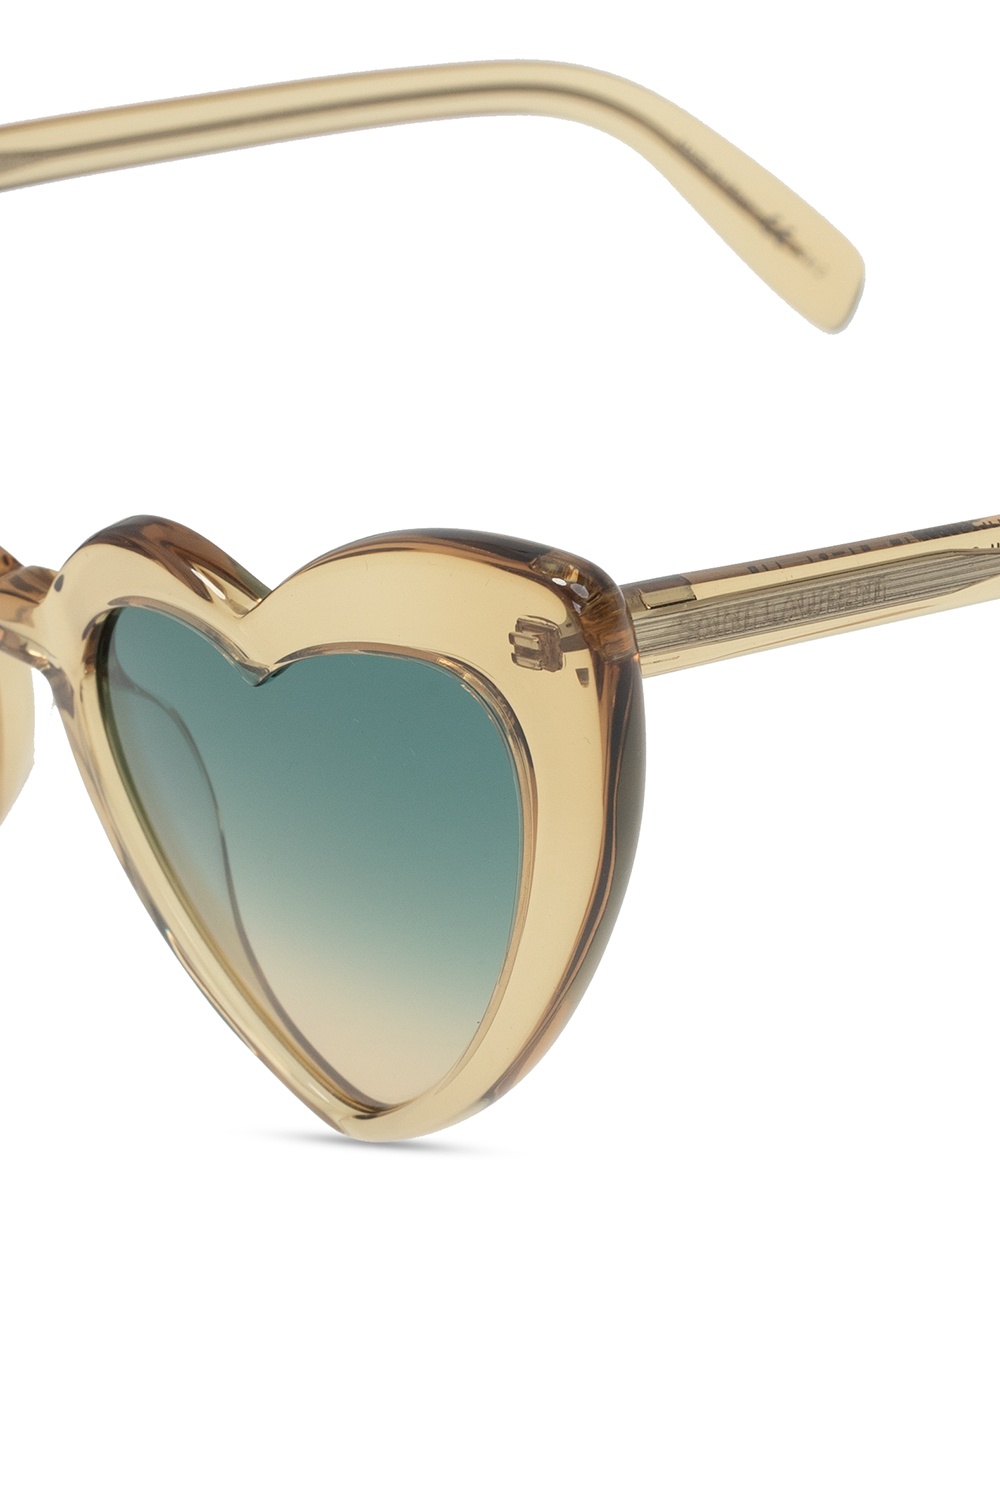 Saint Laurent 'round-frame flip-up sunglasses